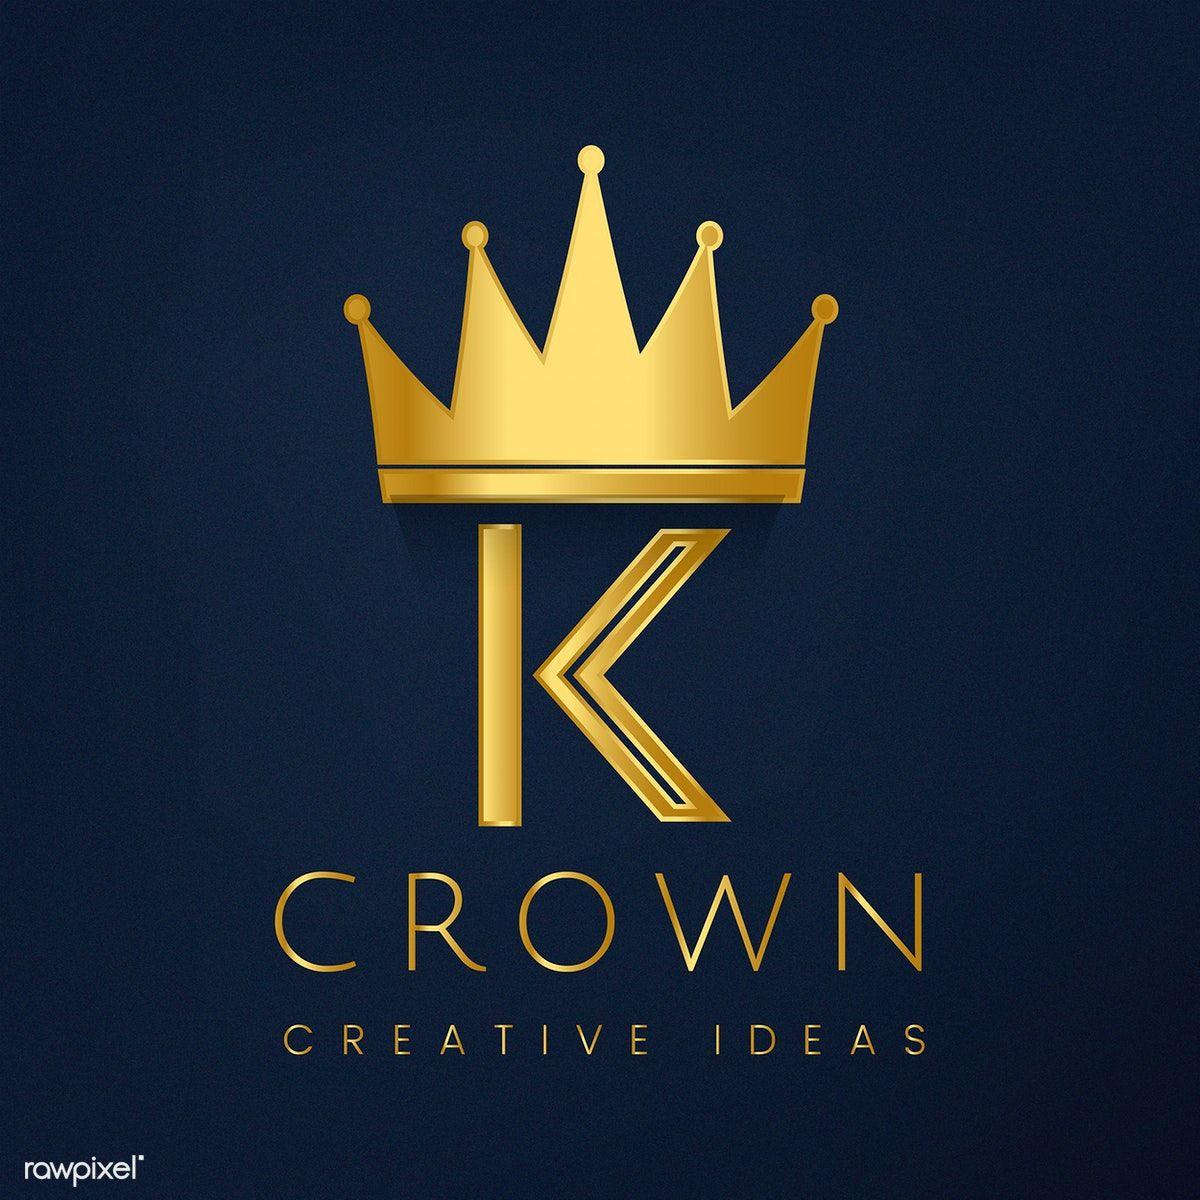 Gold Crown Brand Logo - Golden crown logo | Free stock vector - 489058